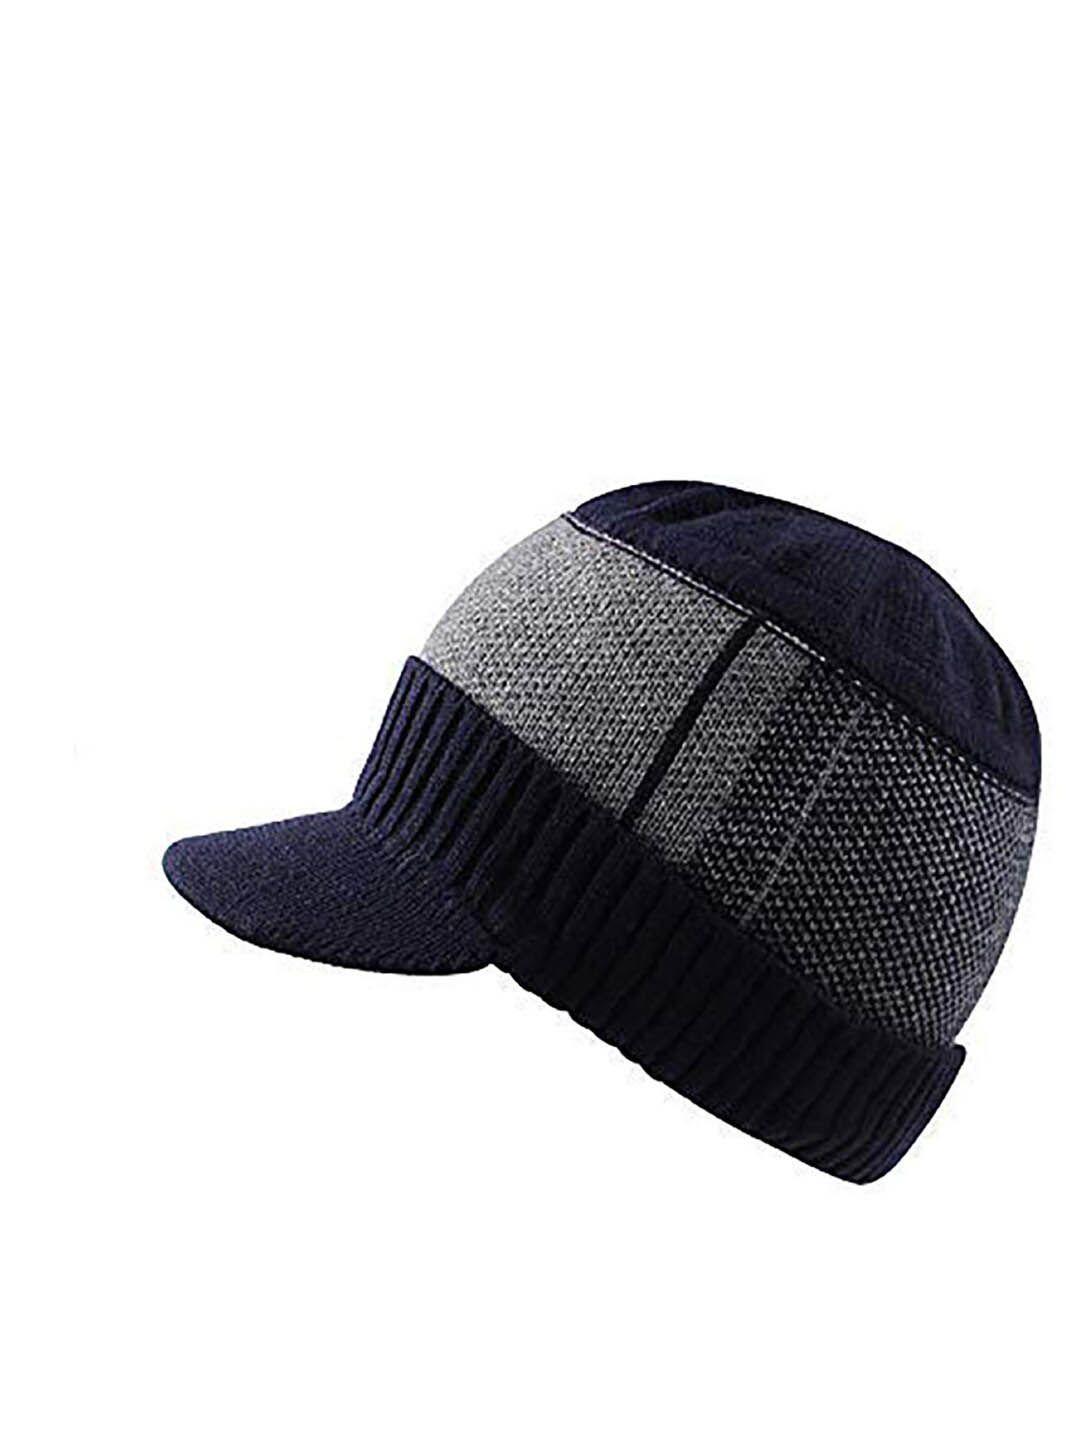 youstylo adults blue & grey colourblocked woolen winter visor cap